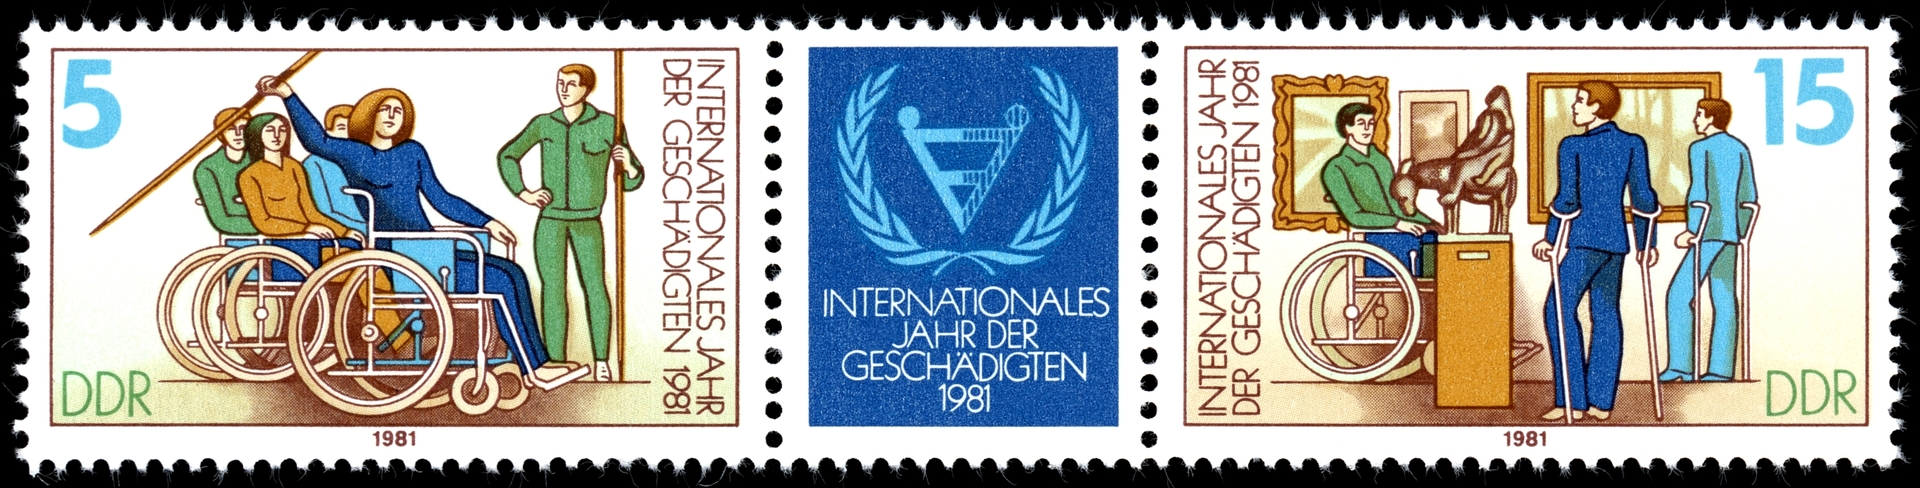 T2_5_Stamps_of_Germany_(DDR)_1981,_MiNr_Zusammendruck_2621,_2622.jpg